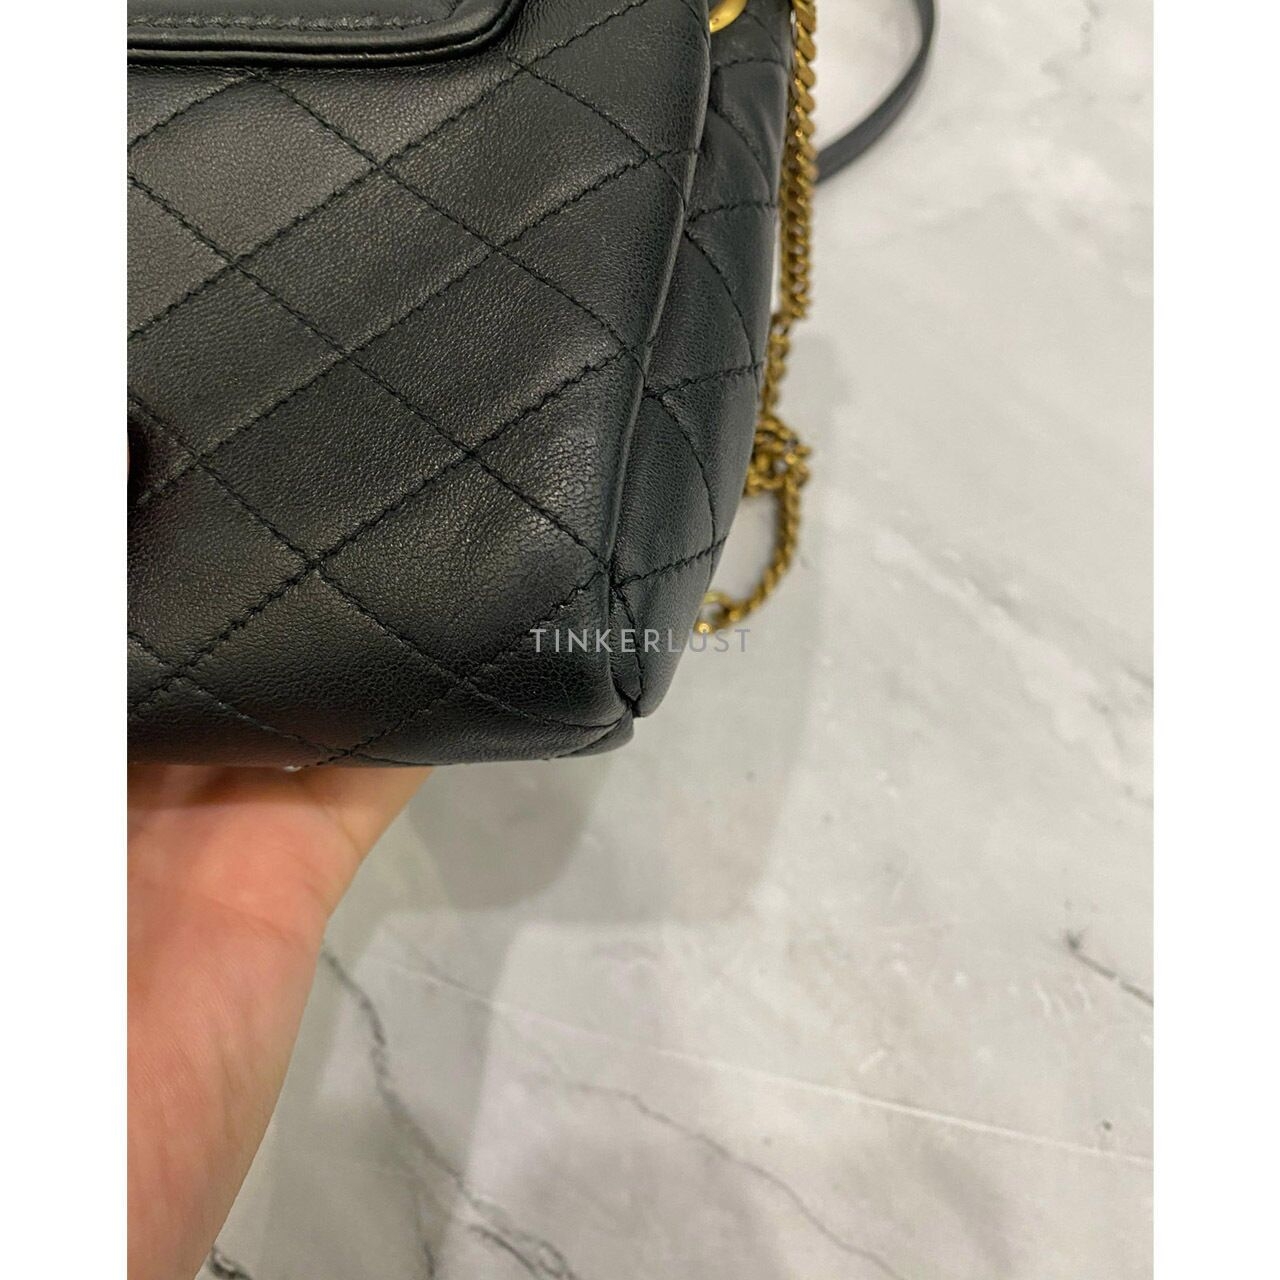 Saint Laurent Mini Lolita Black GHW 2022 Shoulder Bag